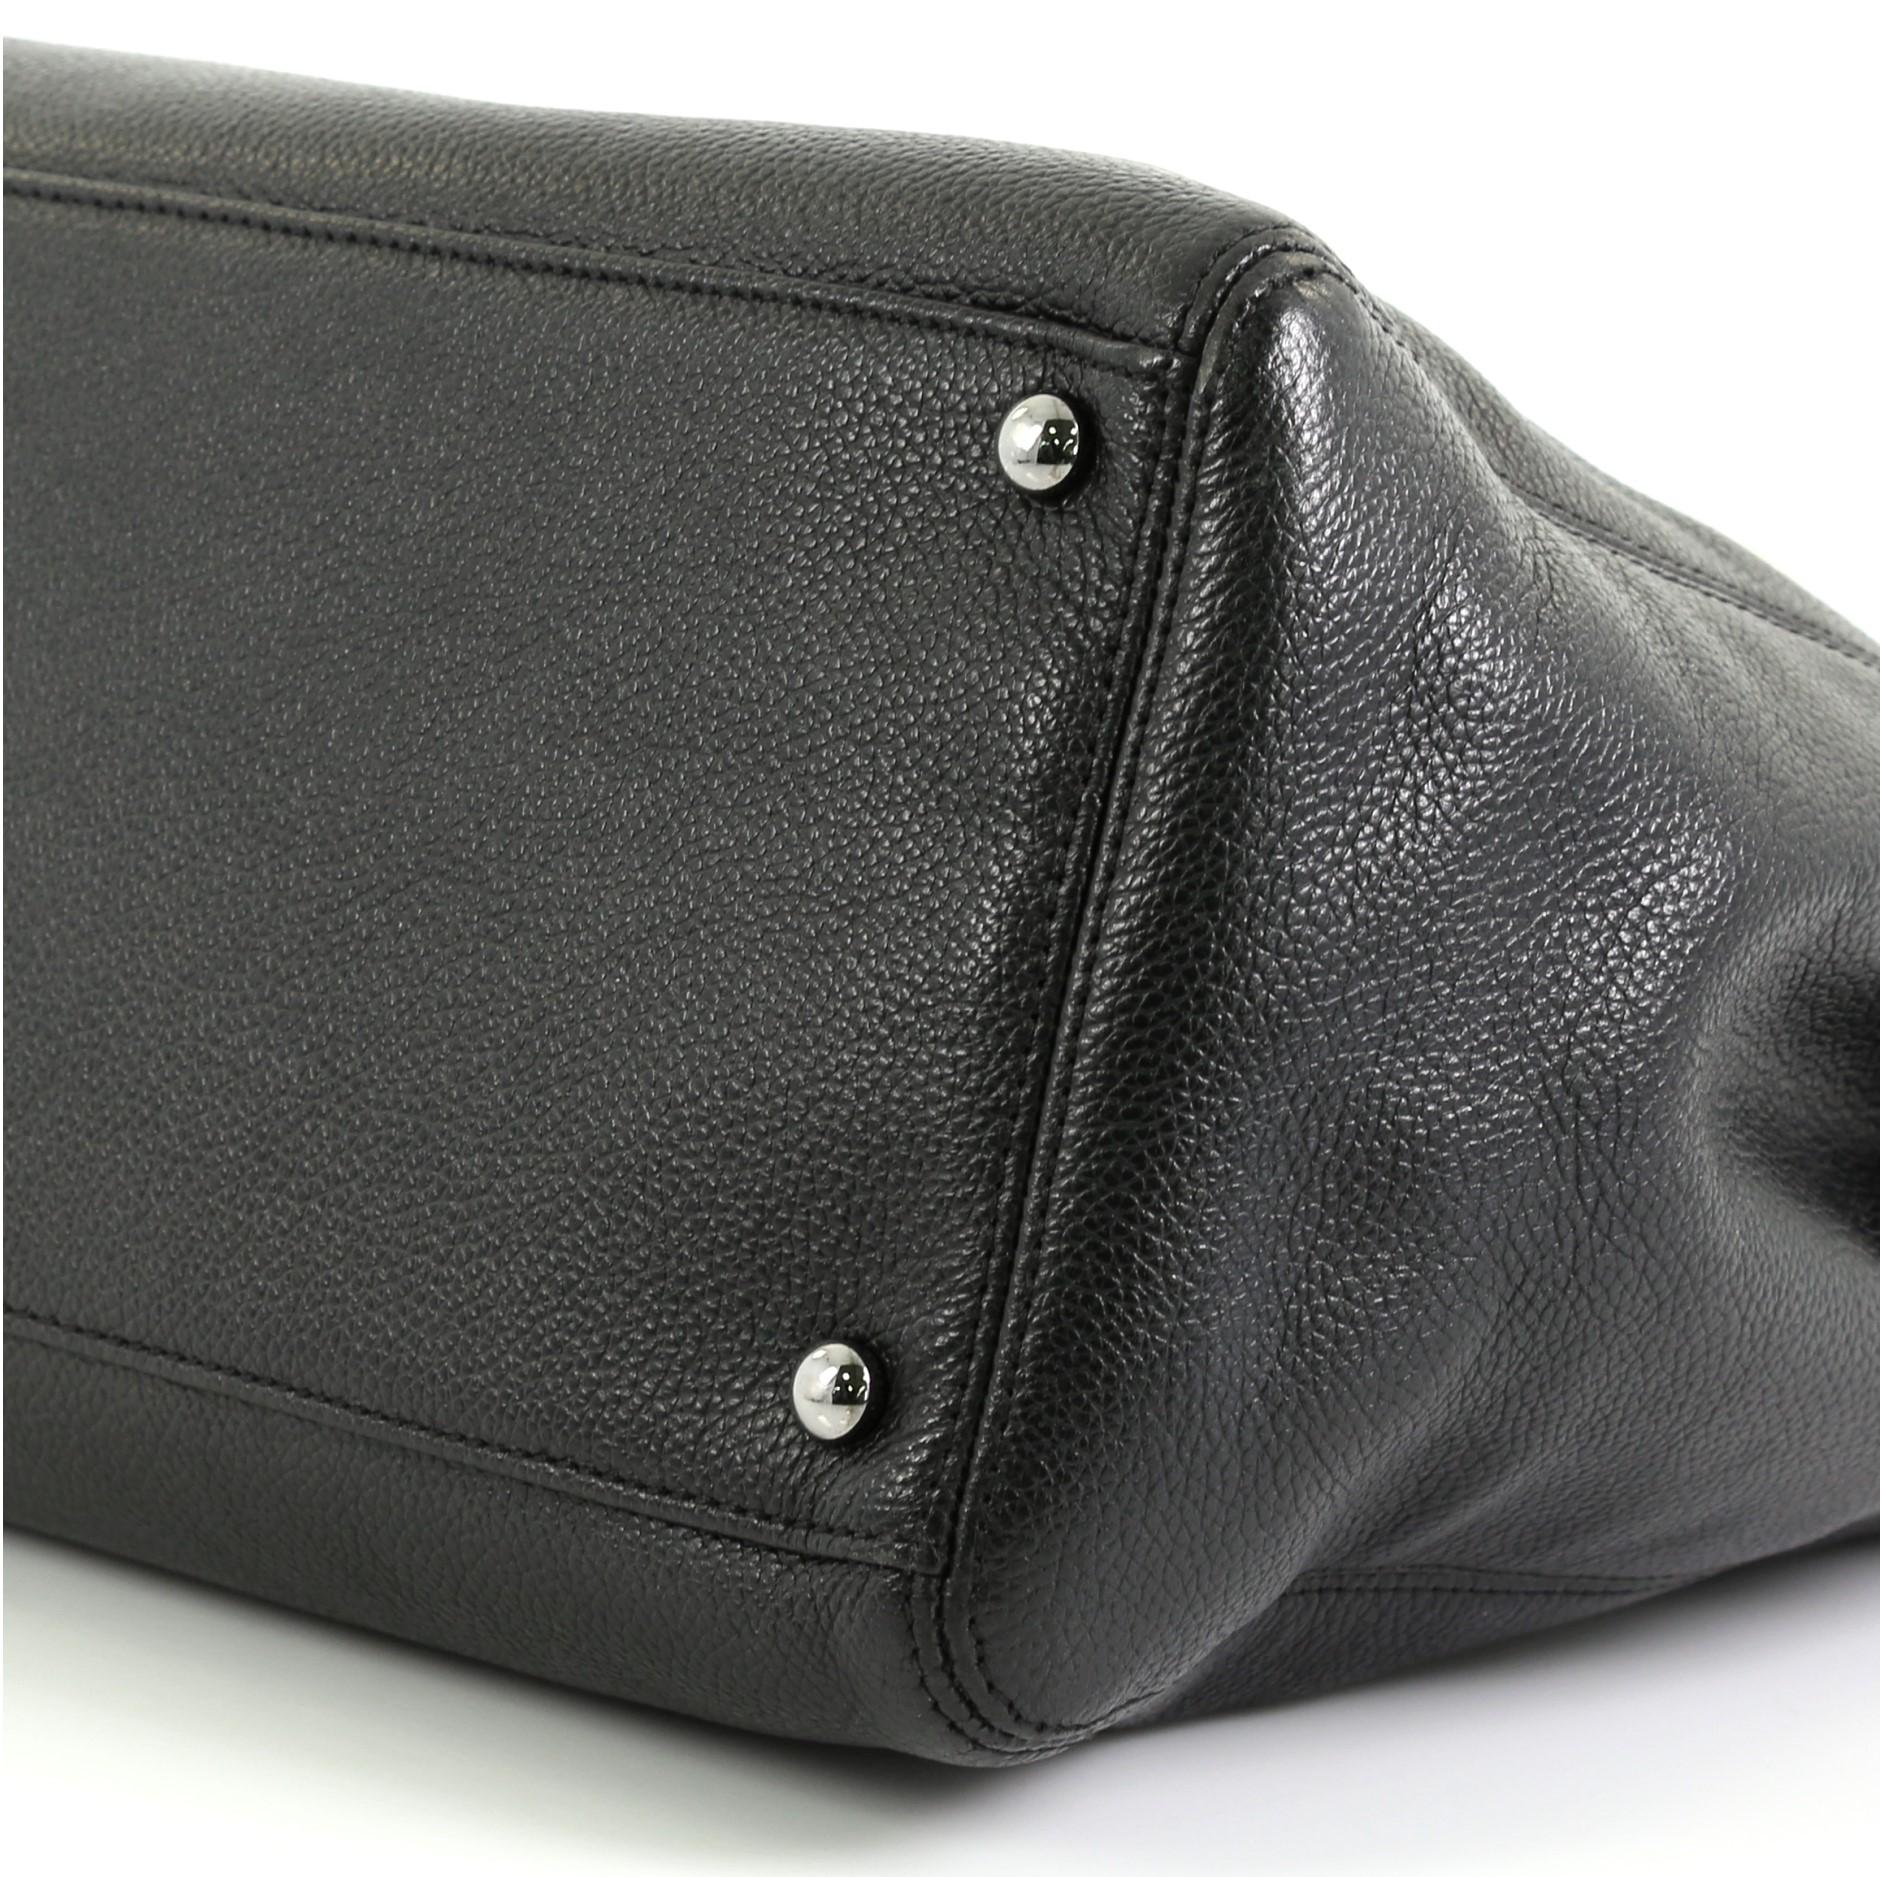 Chanel Reissue Cerf Executive Tote Leather Medium 1